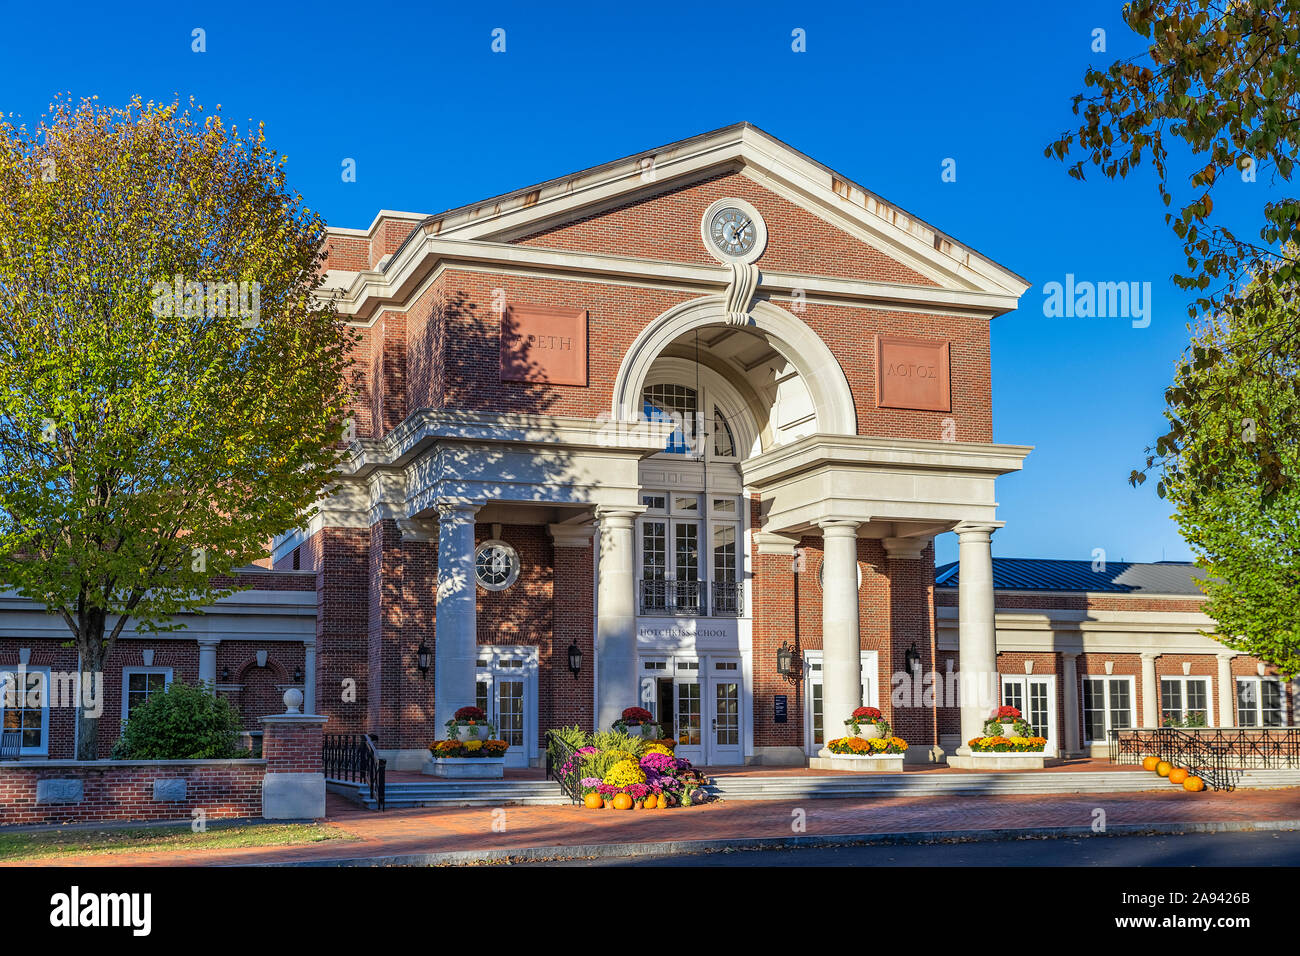 Die Hotchkins Schule, Lakeville, Connecticut, USA. Stockfoto